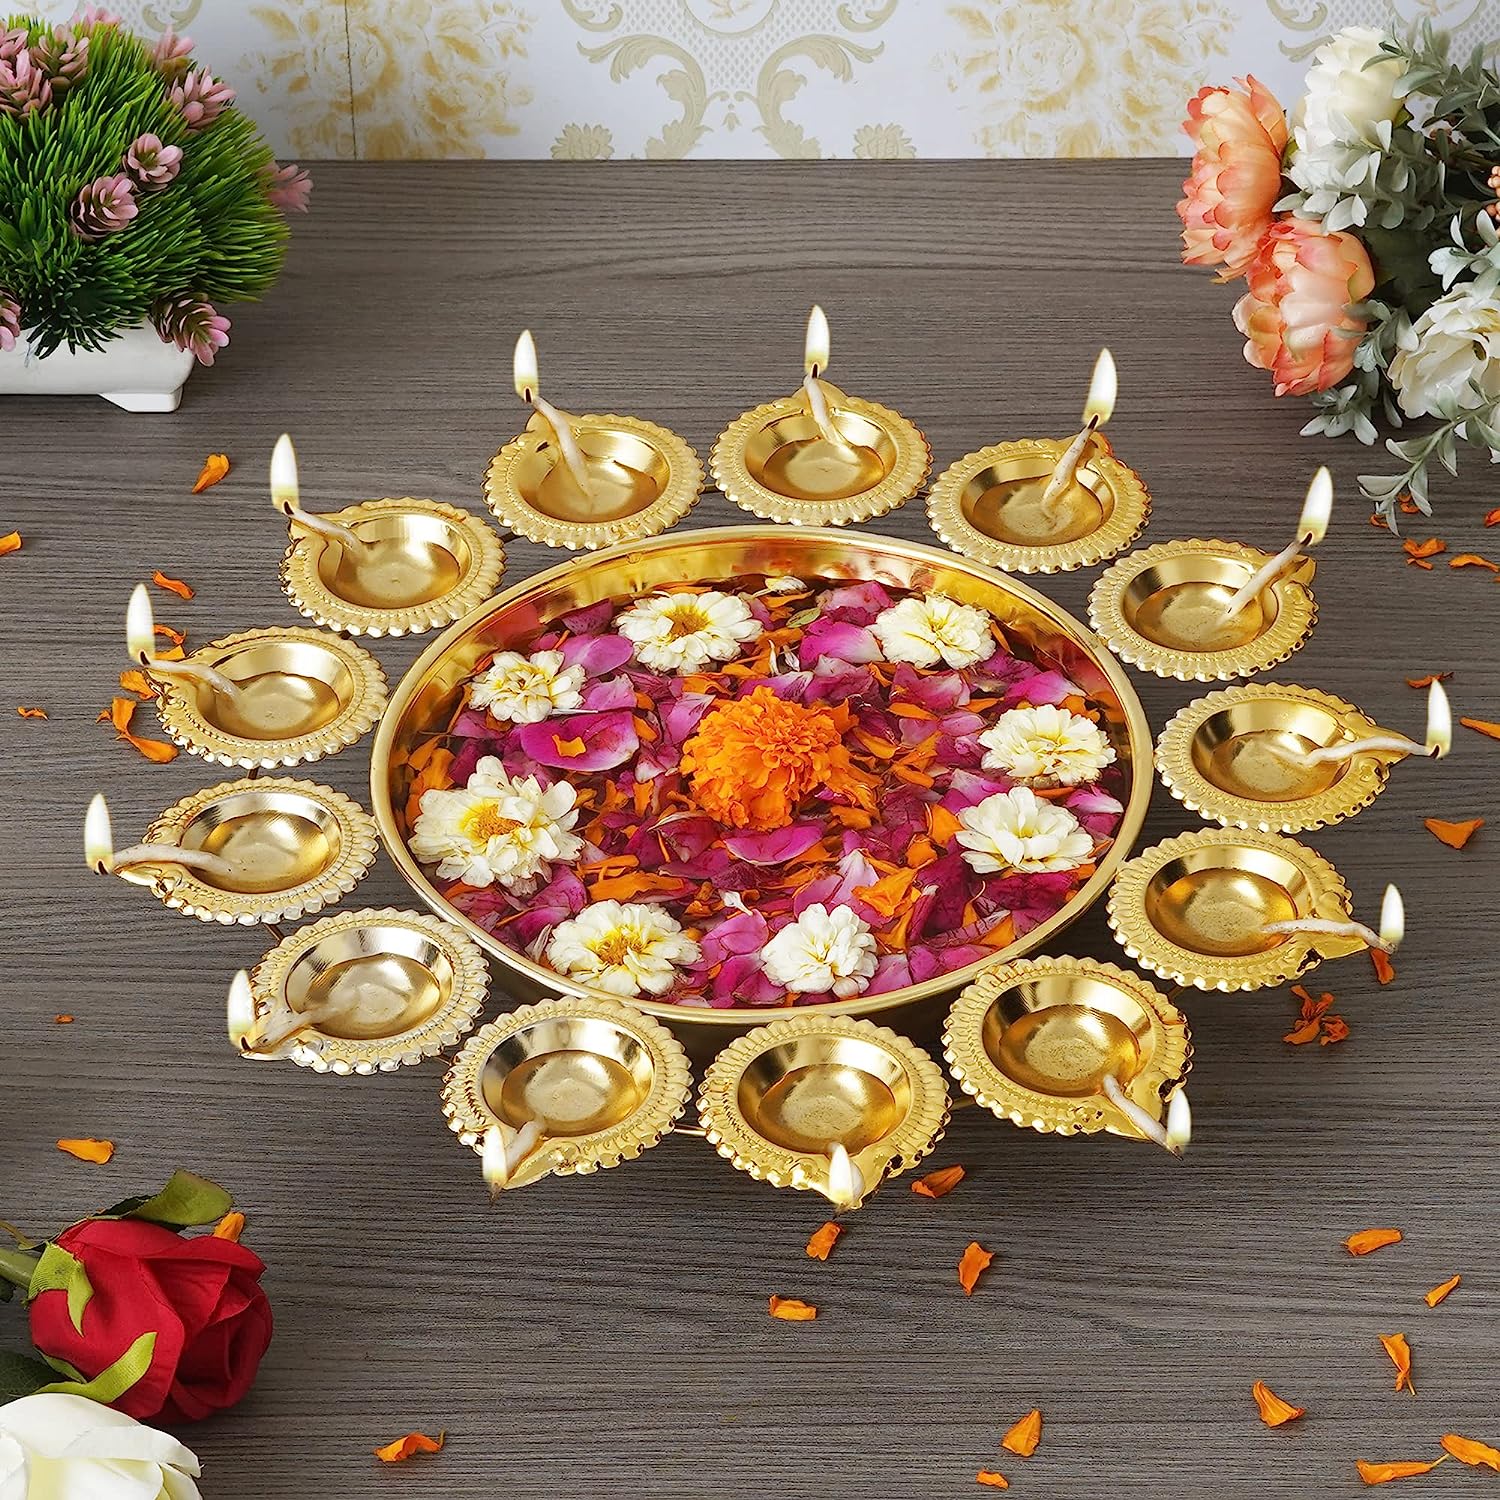 gold decorative urli bowl with flowers and diya for diwali celebration